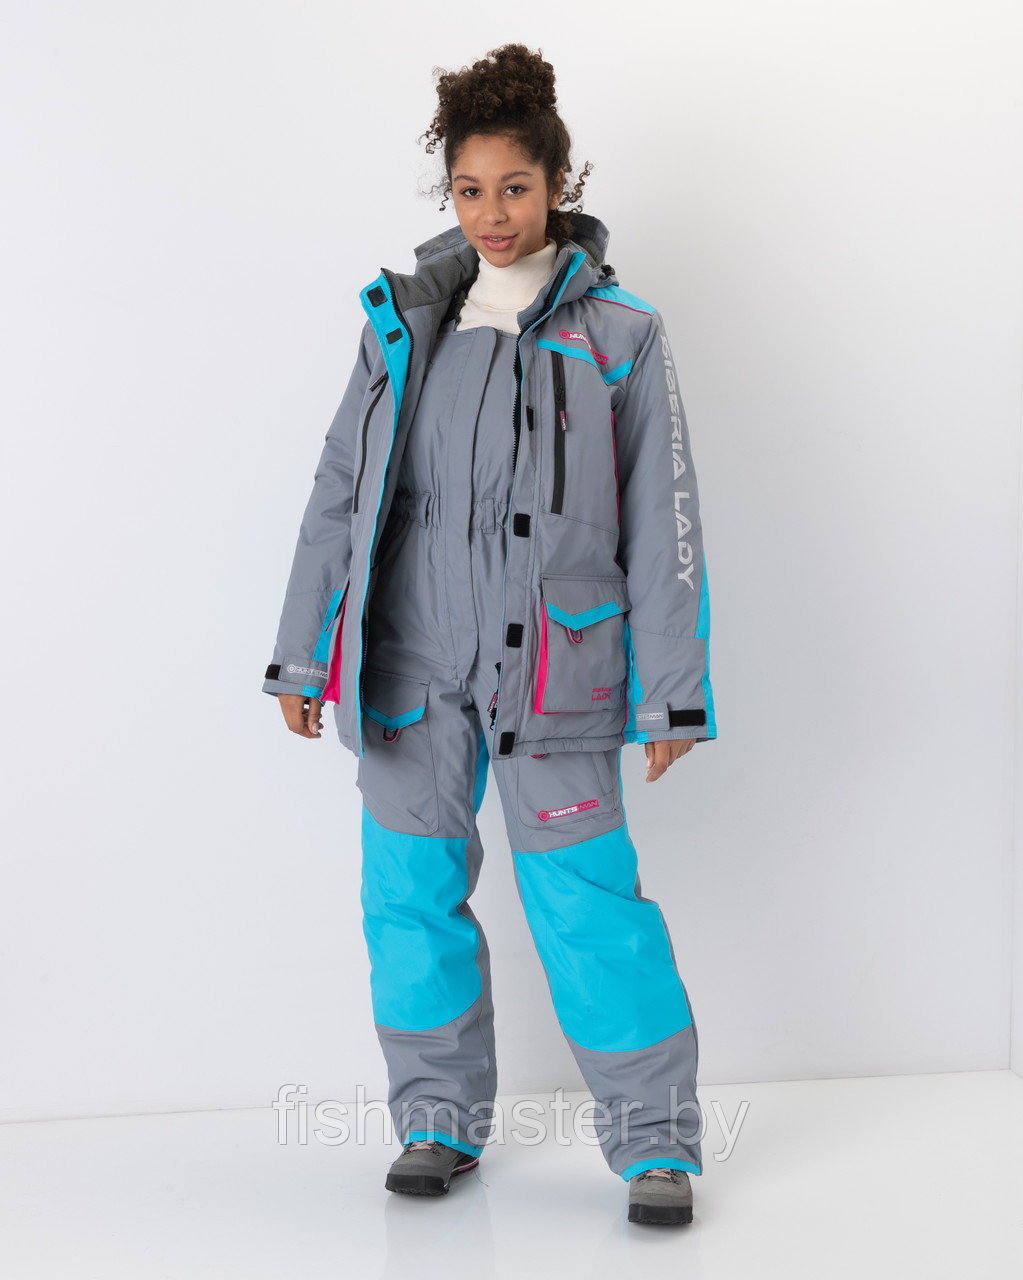 Зимний костюм HUNTSMAN Siberia Lady мембрана 6000/6000 -35°C цвет Серый/Голубой ткань Breathable